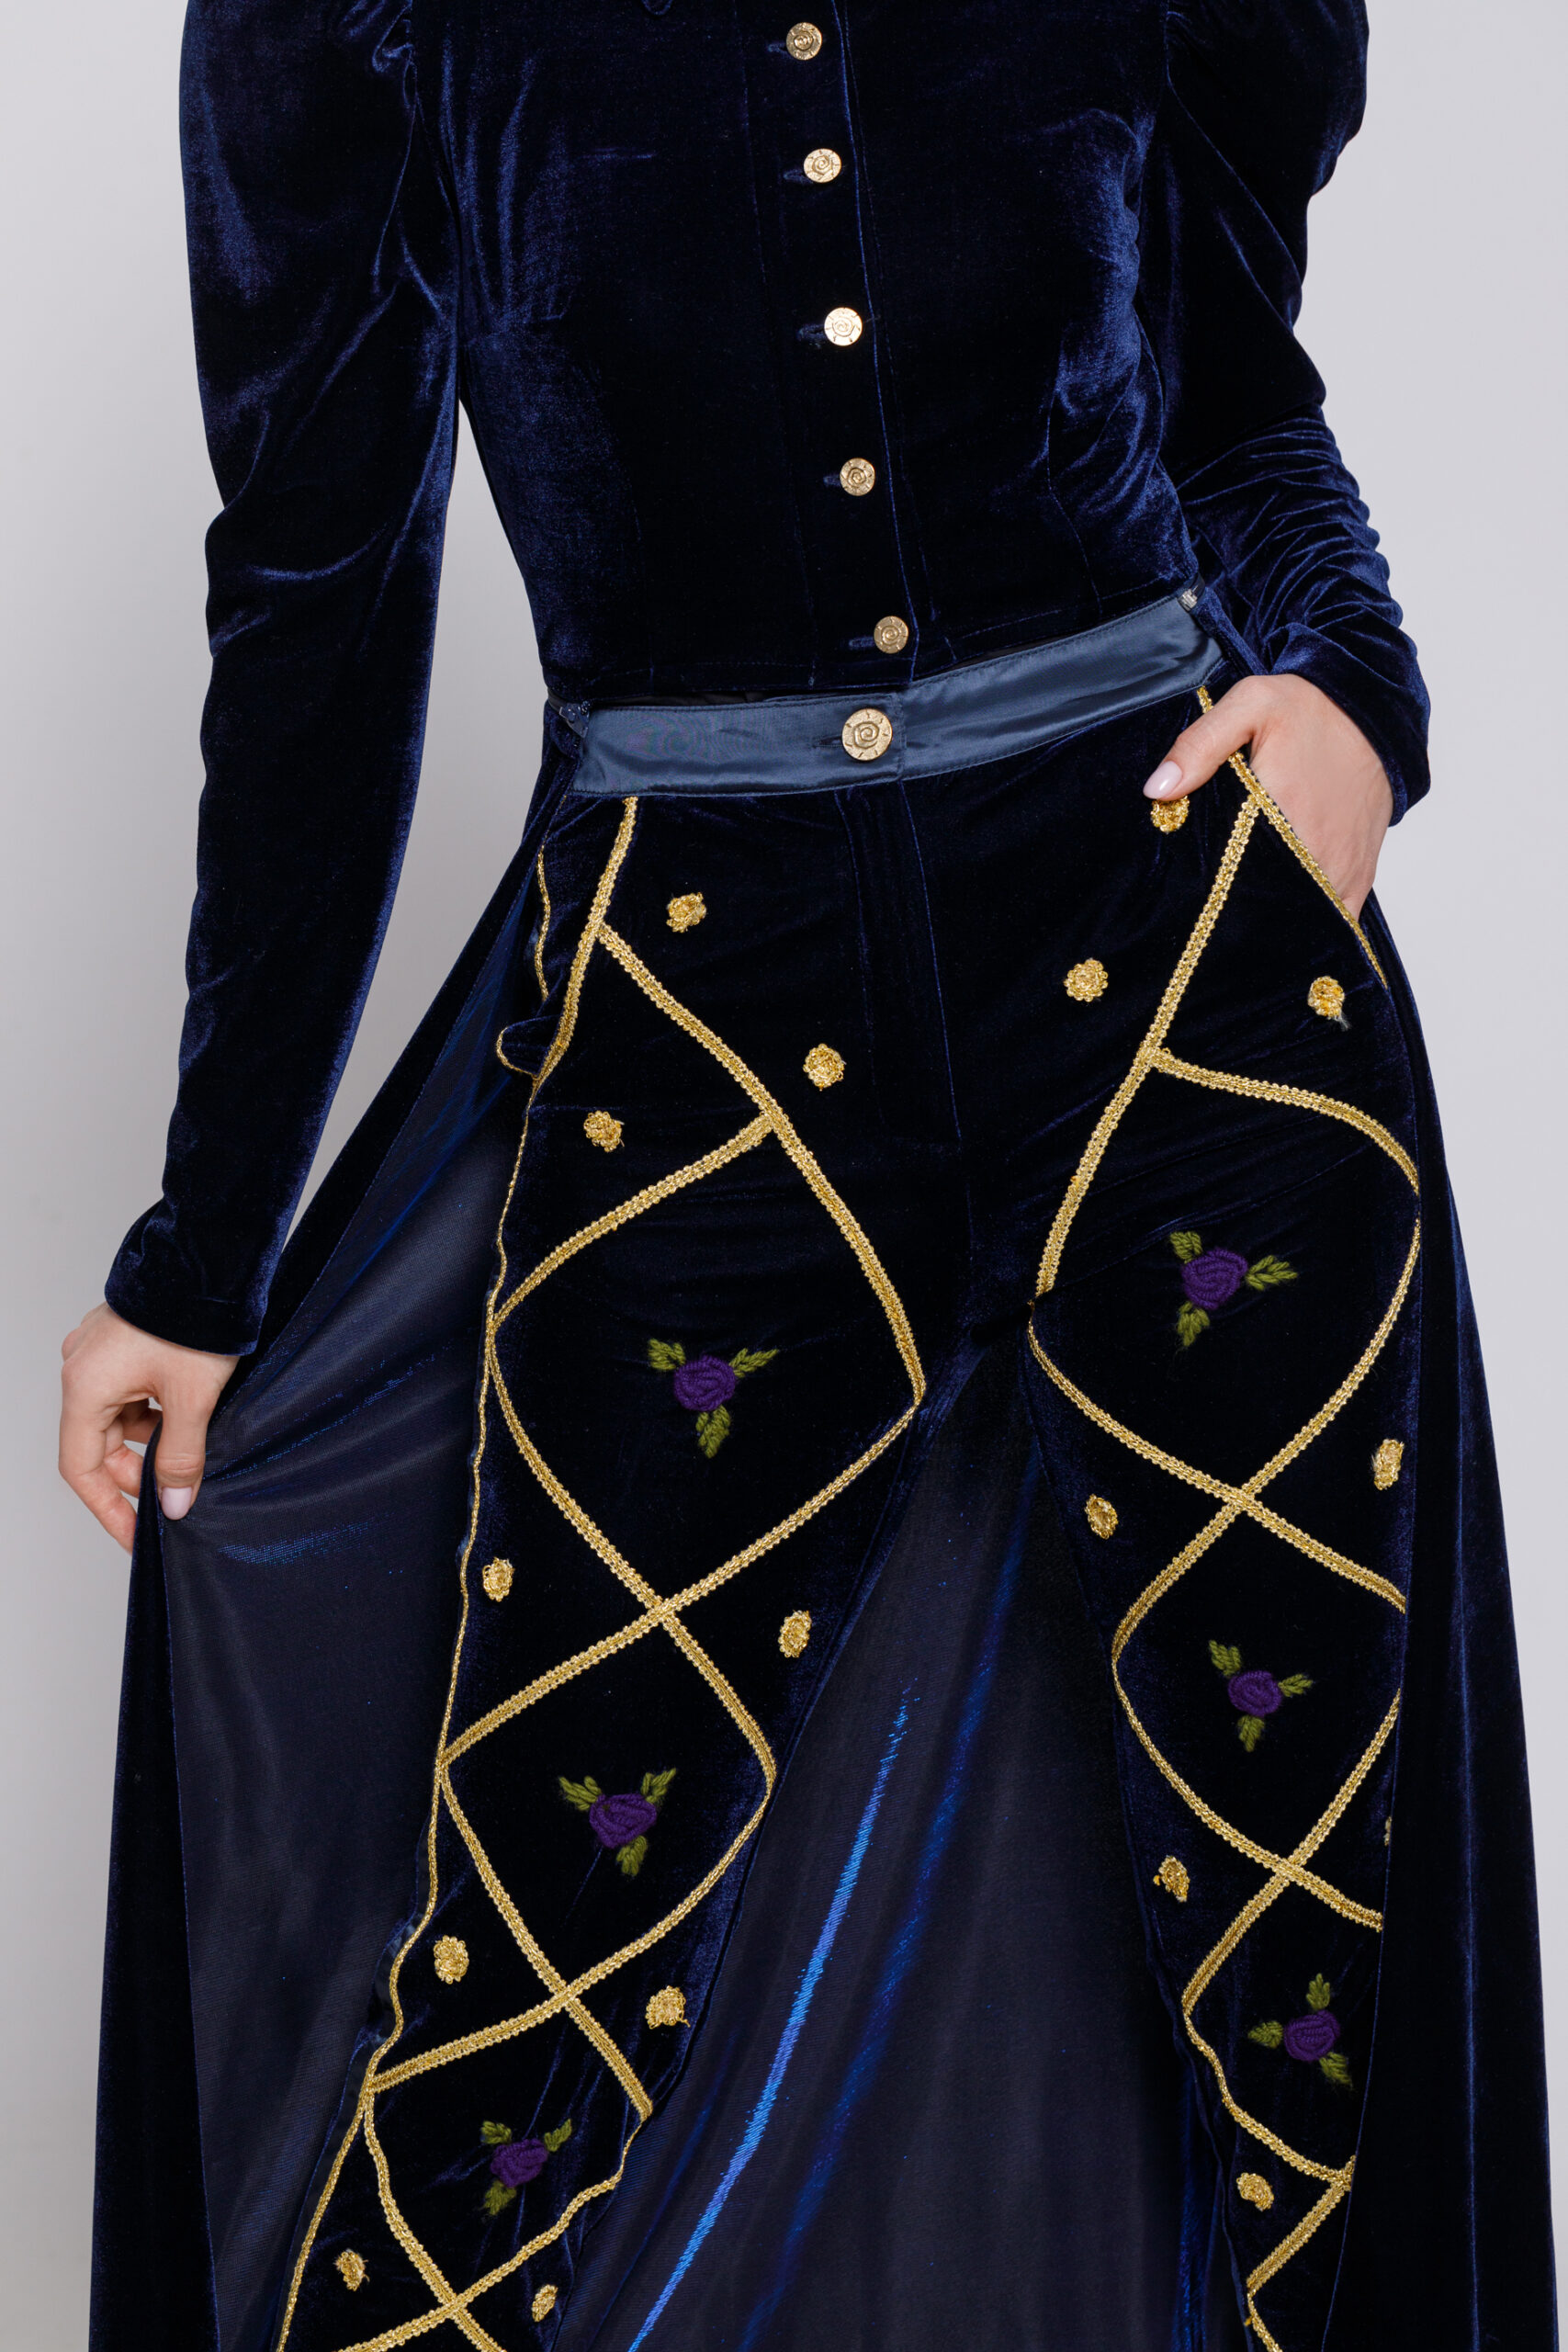 Pantalon TAMAR din catifea bleumarin cu romburi aurii. Materiale naturale, design unicat, cu broderie si aplicatii handmade